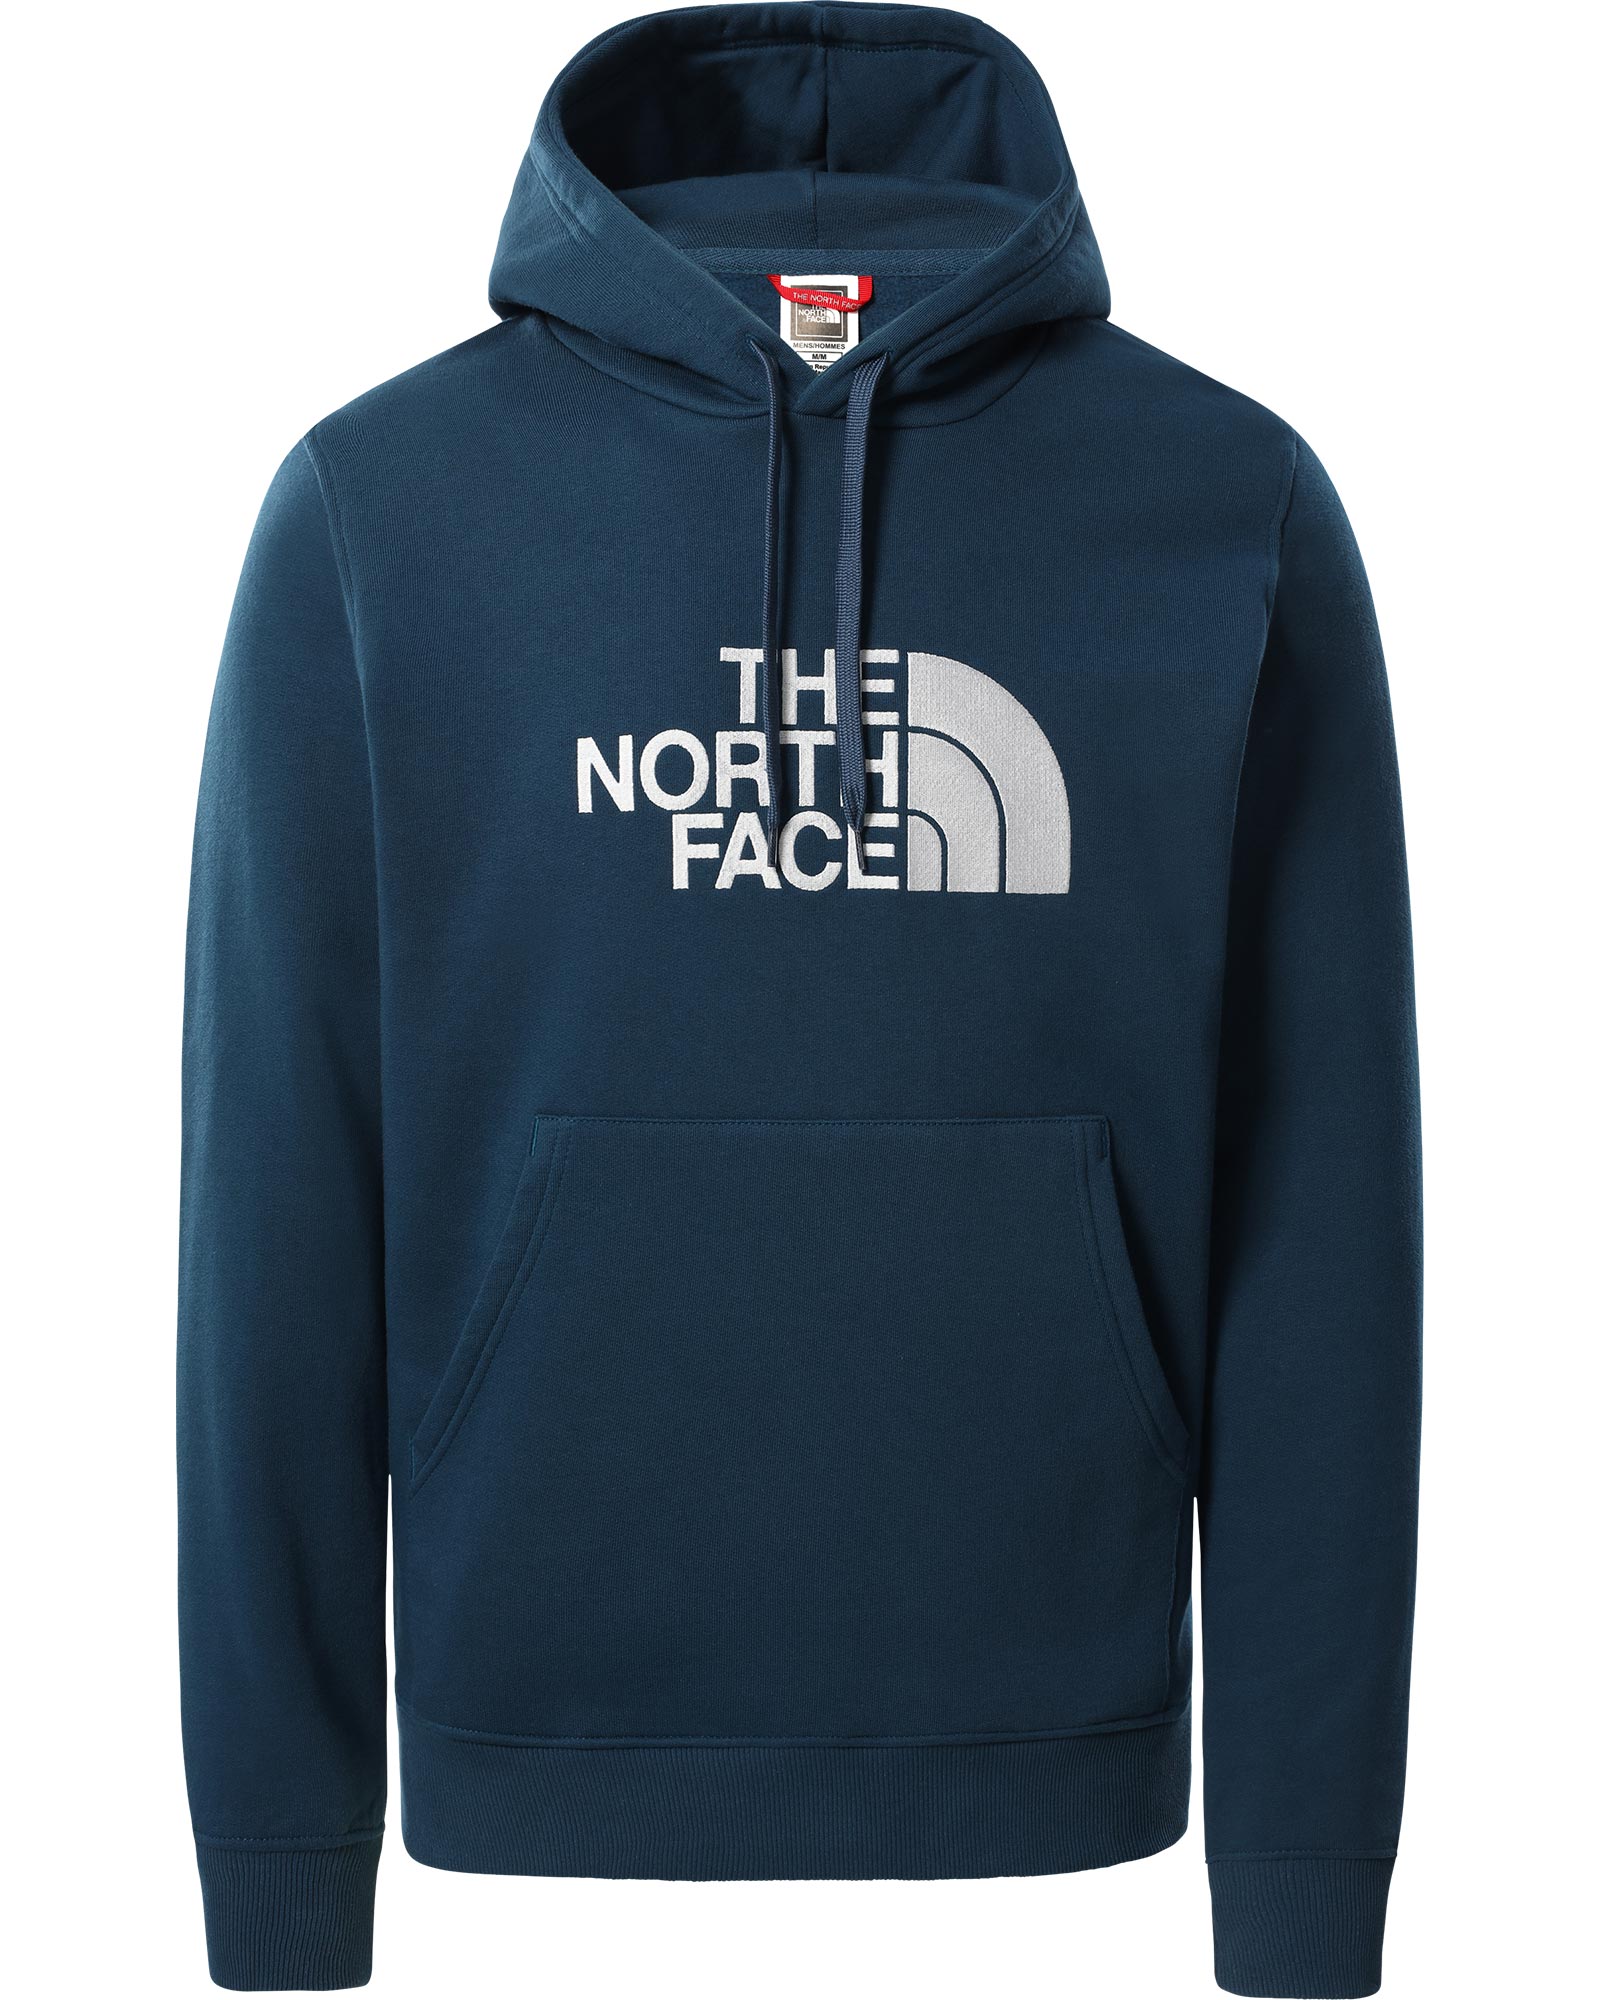 The North Face Drew Peak Men’s Hoodie - Monterey Blue S